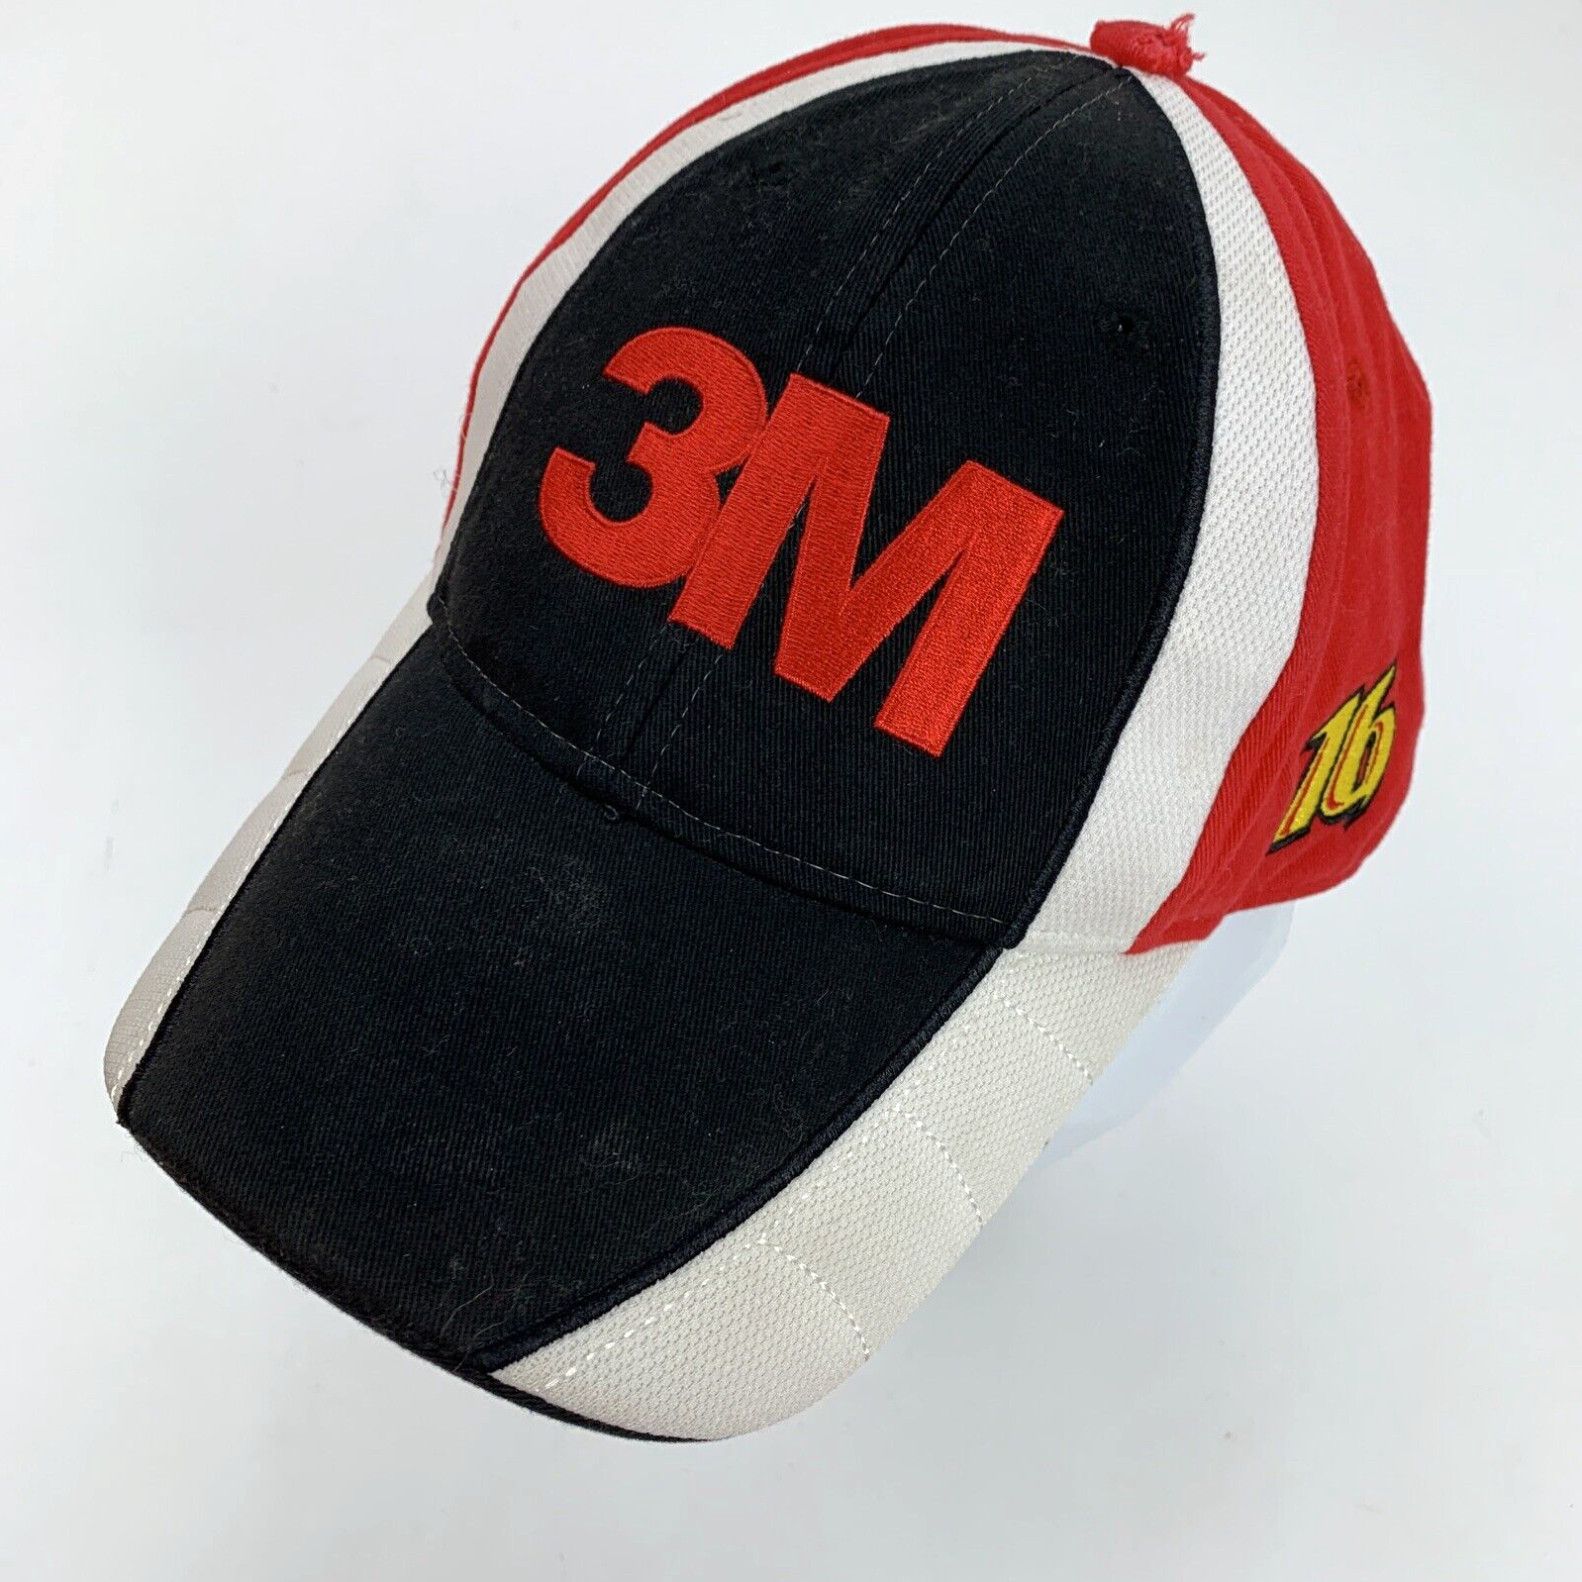 VINTAGE Chase Authentics Jeff Gordon Racing Cap Hat Tan Essential